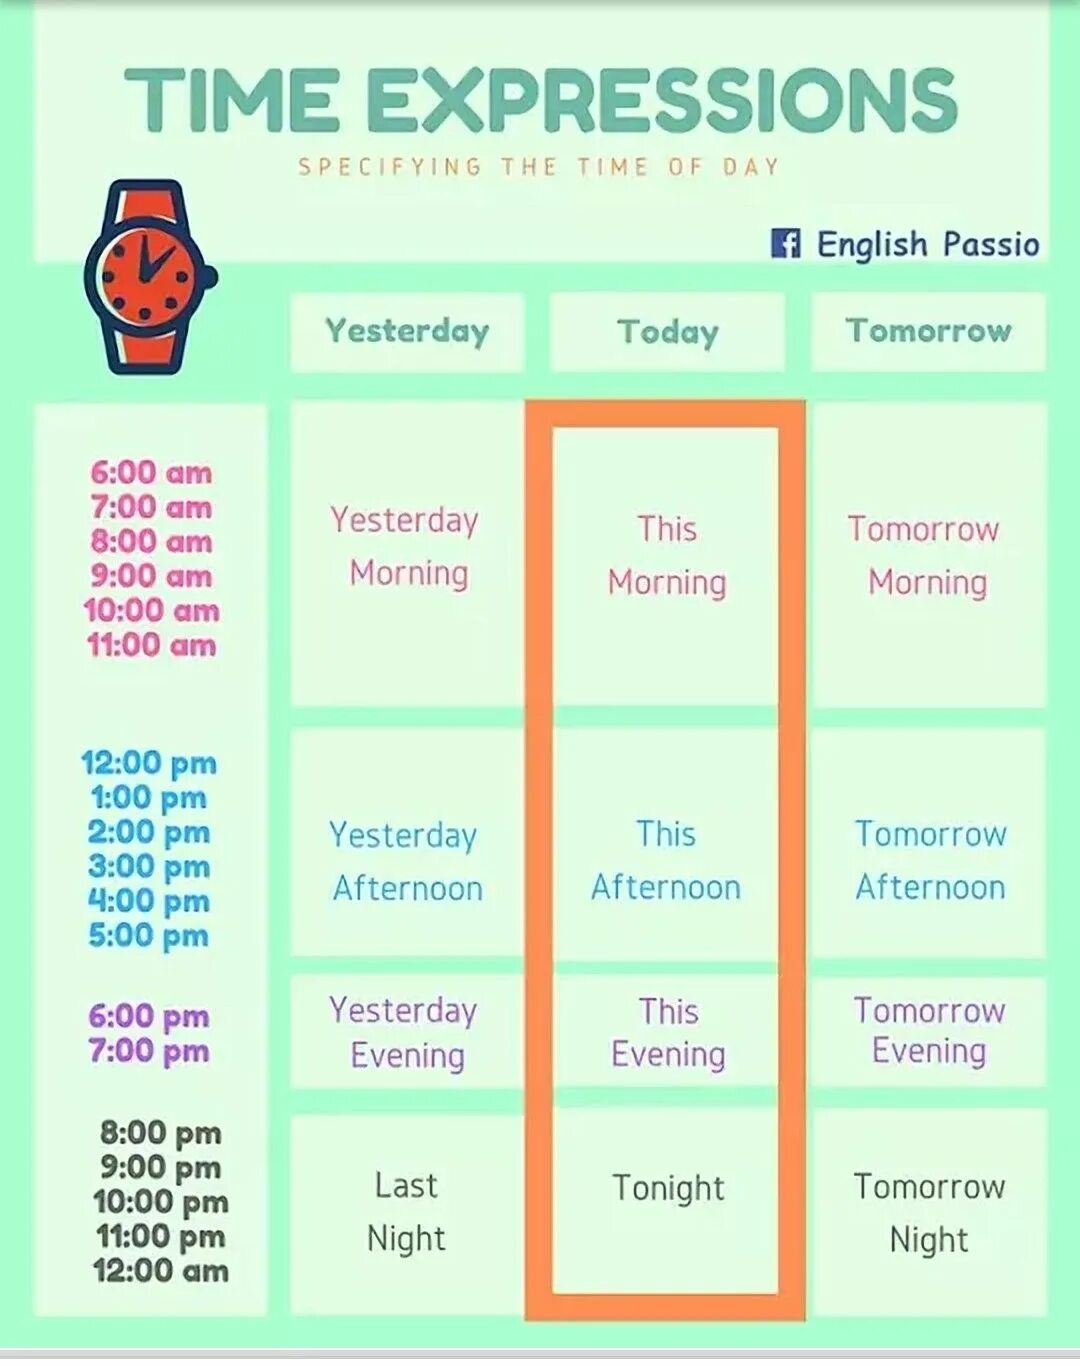 Time expressions в английском языке. This какое время в английском. Afternoon какое время в английском языке. How to say time in English. Afternoon hours